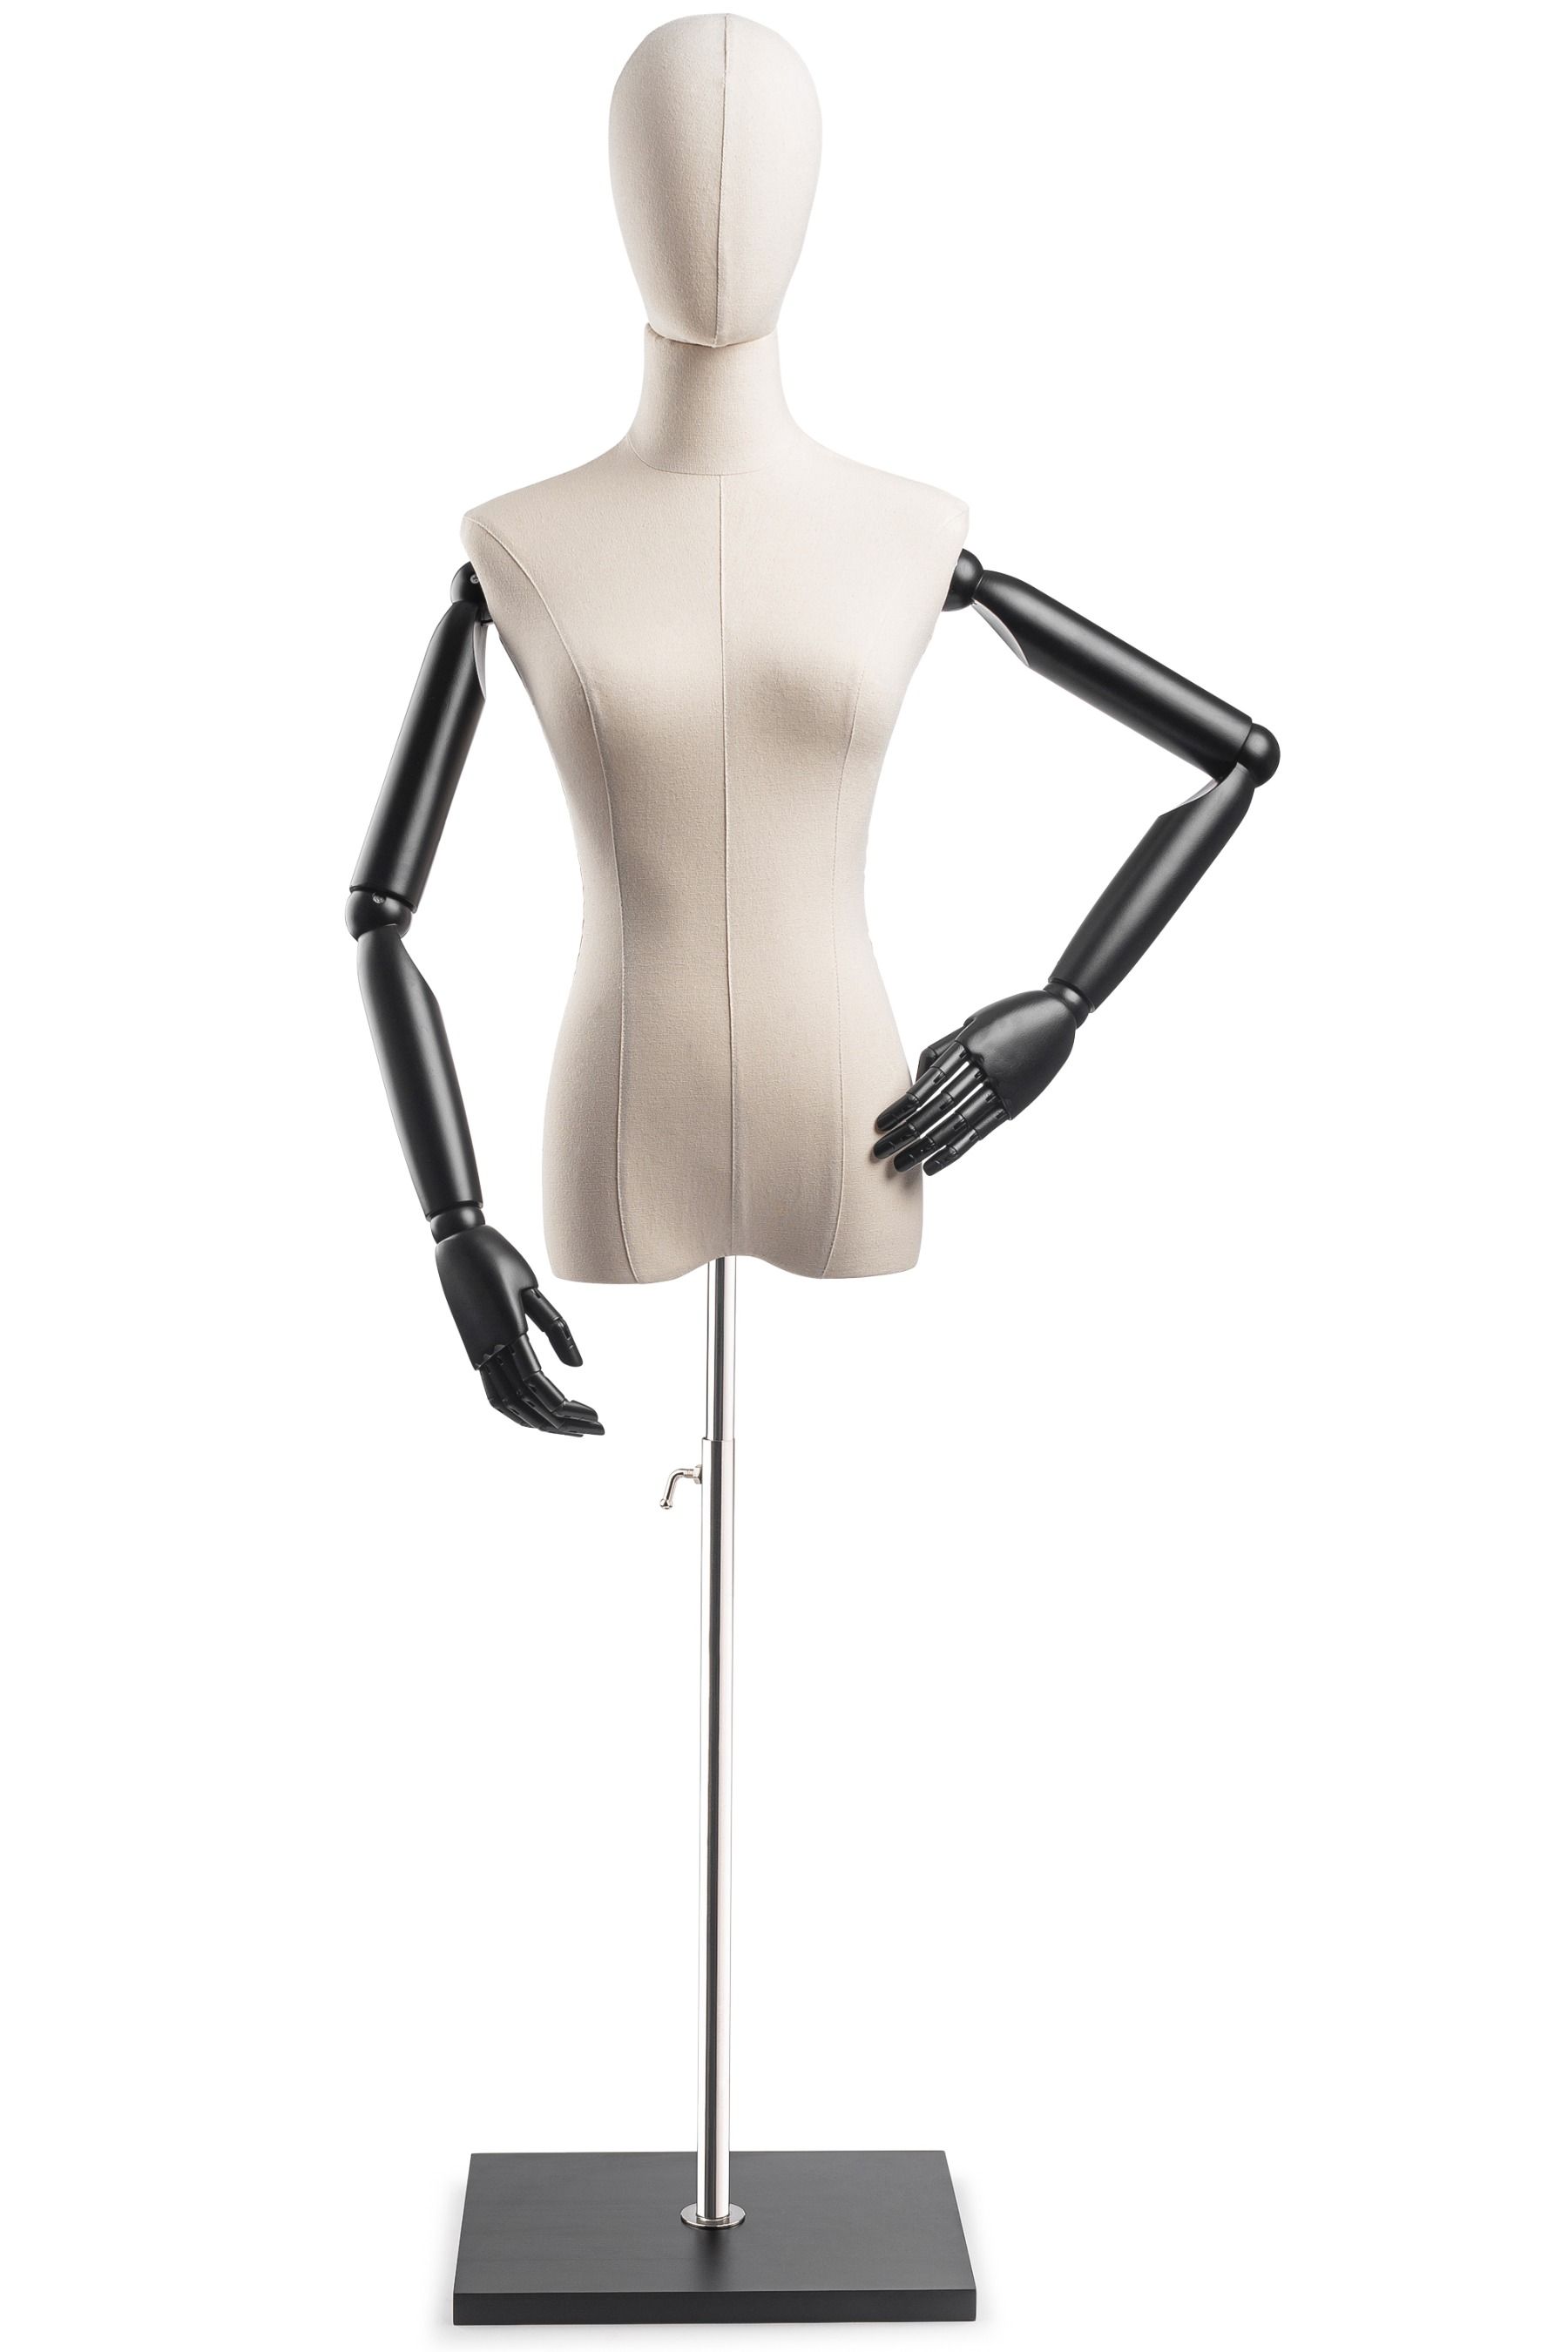 Female mannequin torso to display Christmas tree black/white Dress form MF-88 